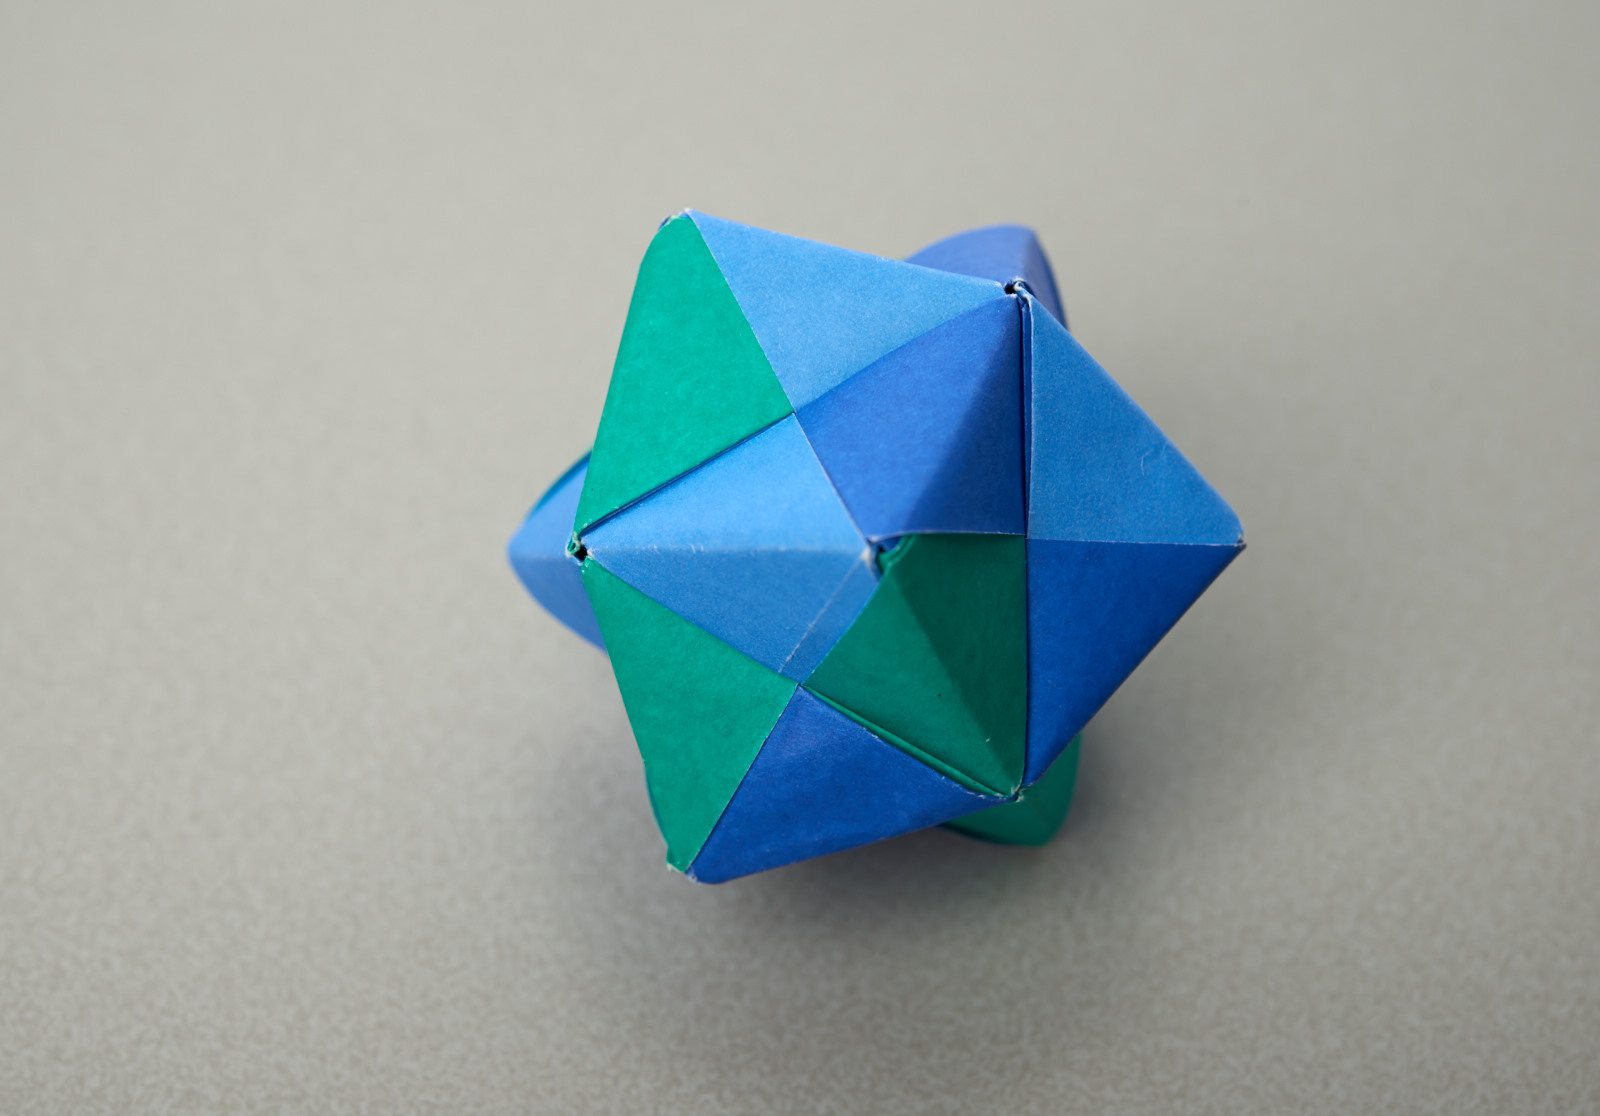 Stellated octahedron